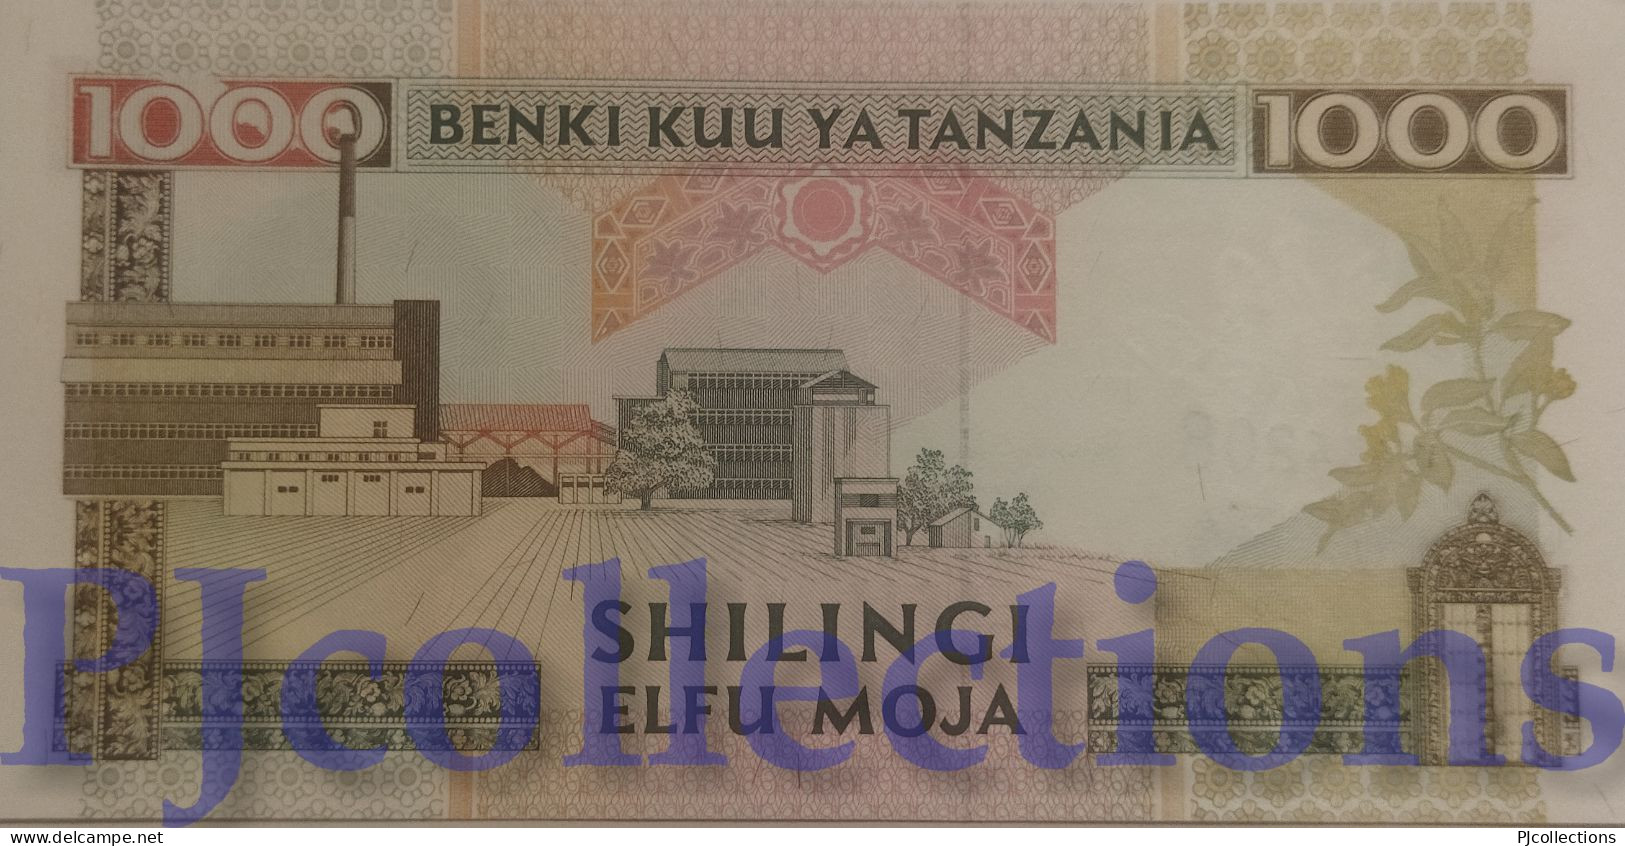 TANZANIA 1000 SHILINGI 1993 PICK 27a UNC - Tanzania